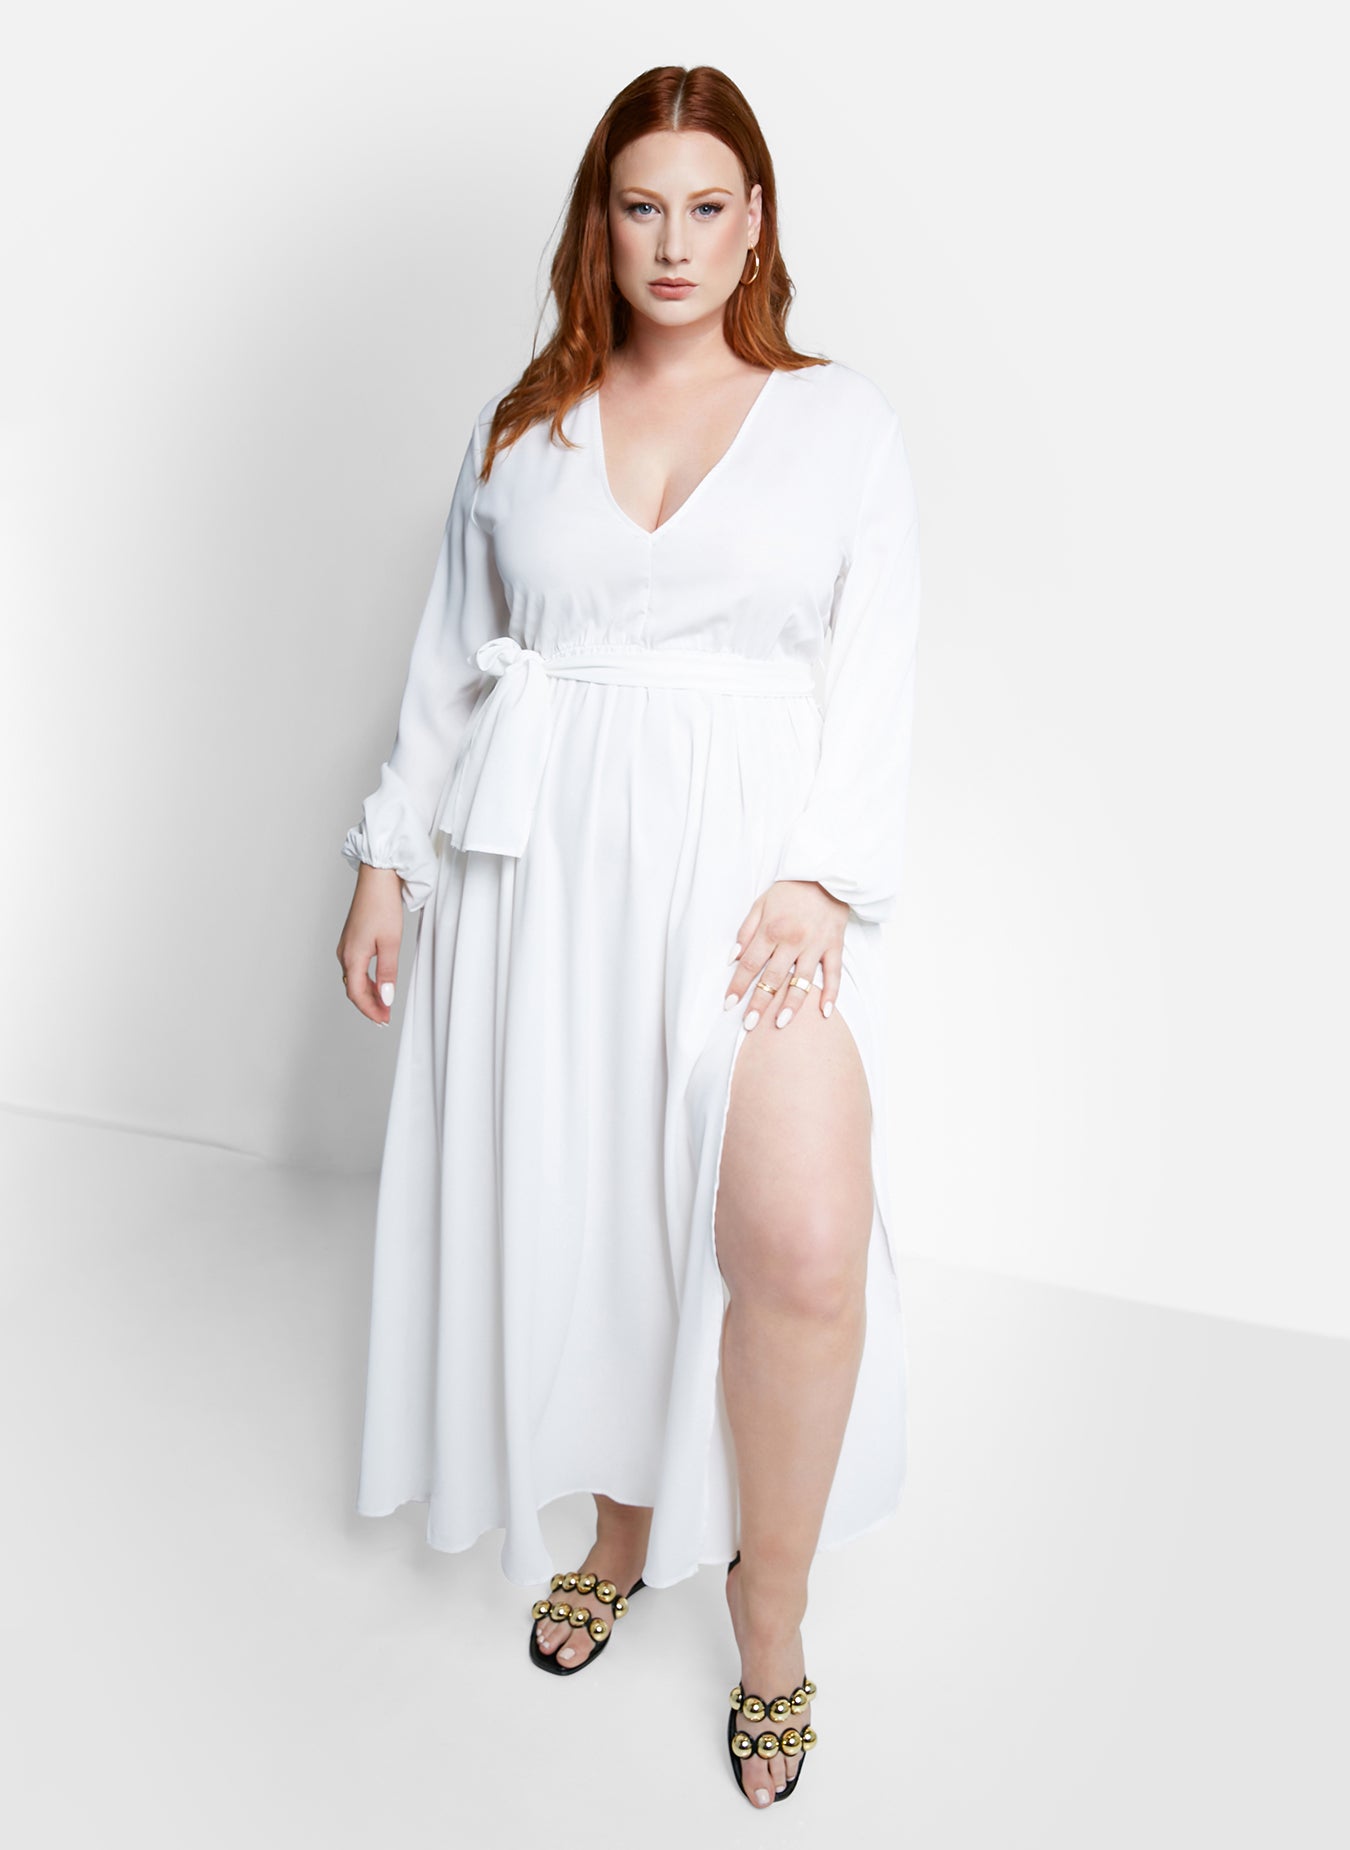 Shop Plus Size White Dresses for Women's - New Arrivals – REBDOLLS